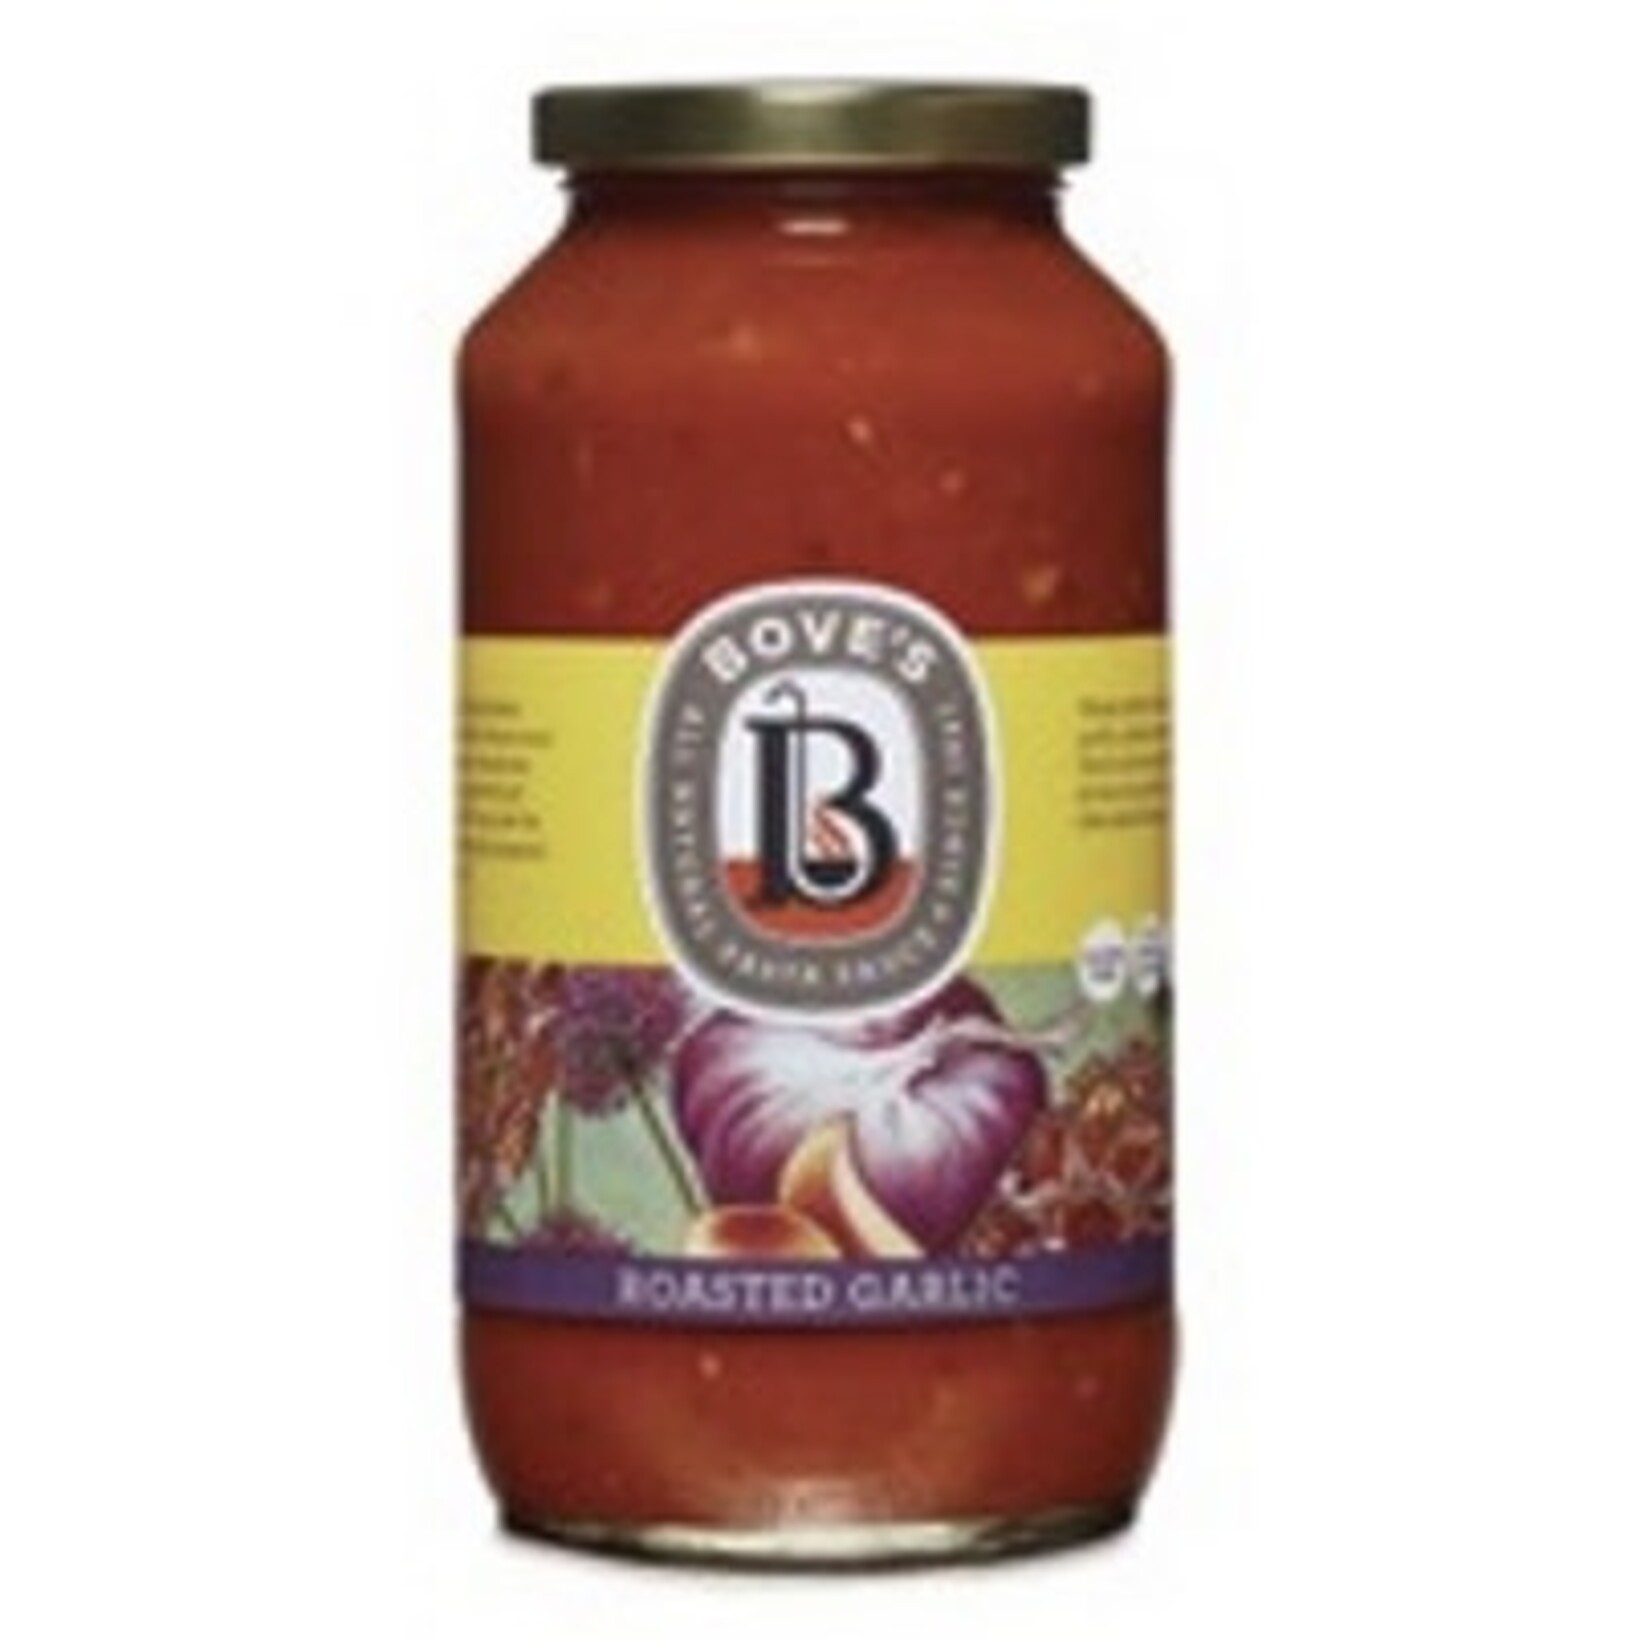 BOVE'S BOVE'S Roasted Garlic Tomato Sauce